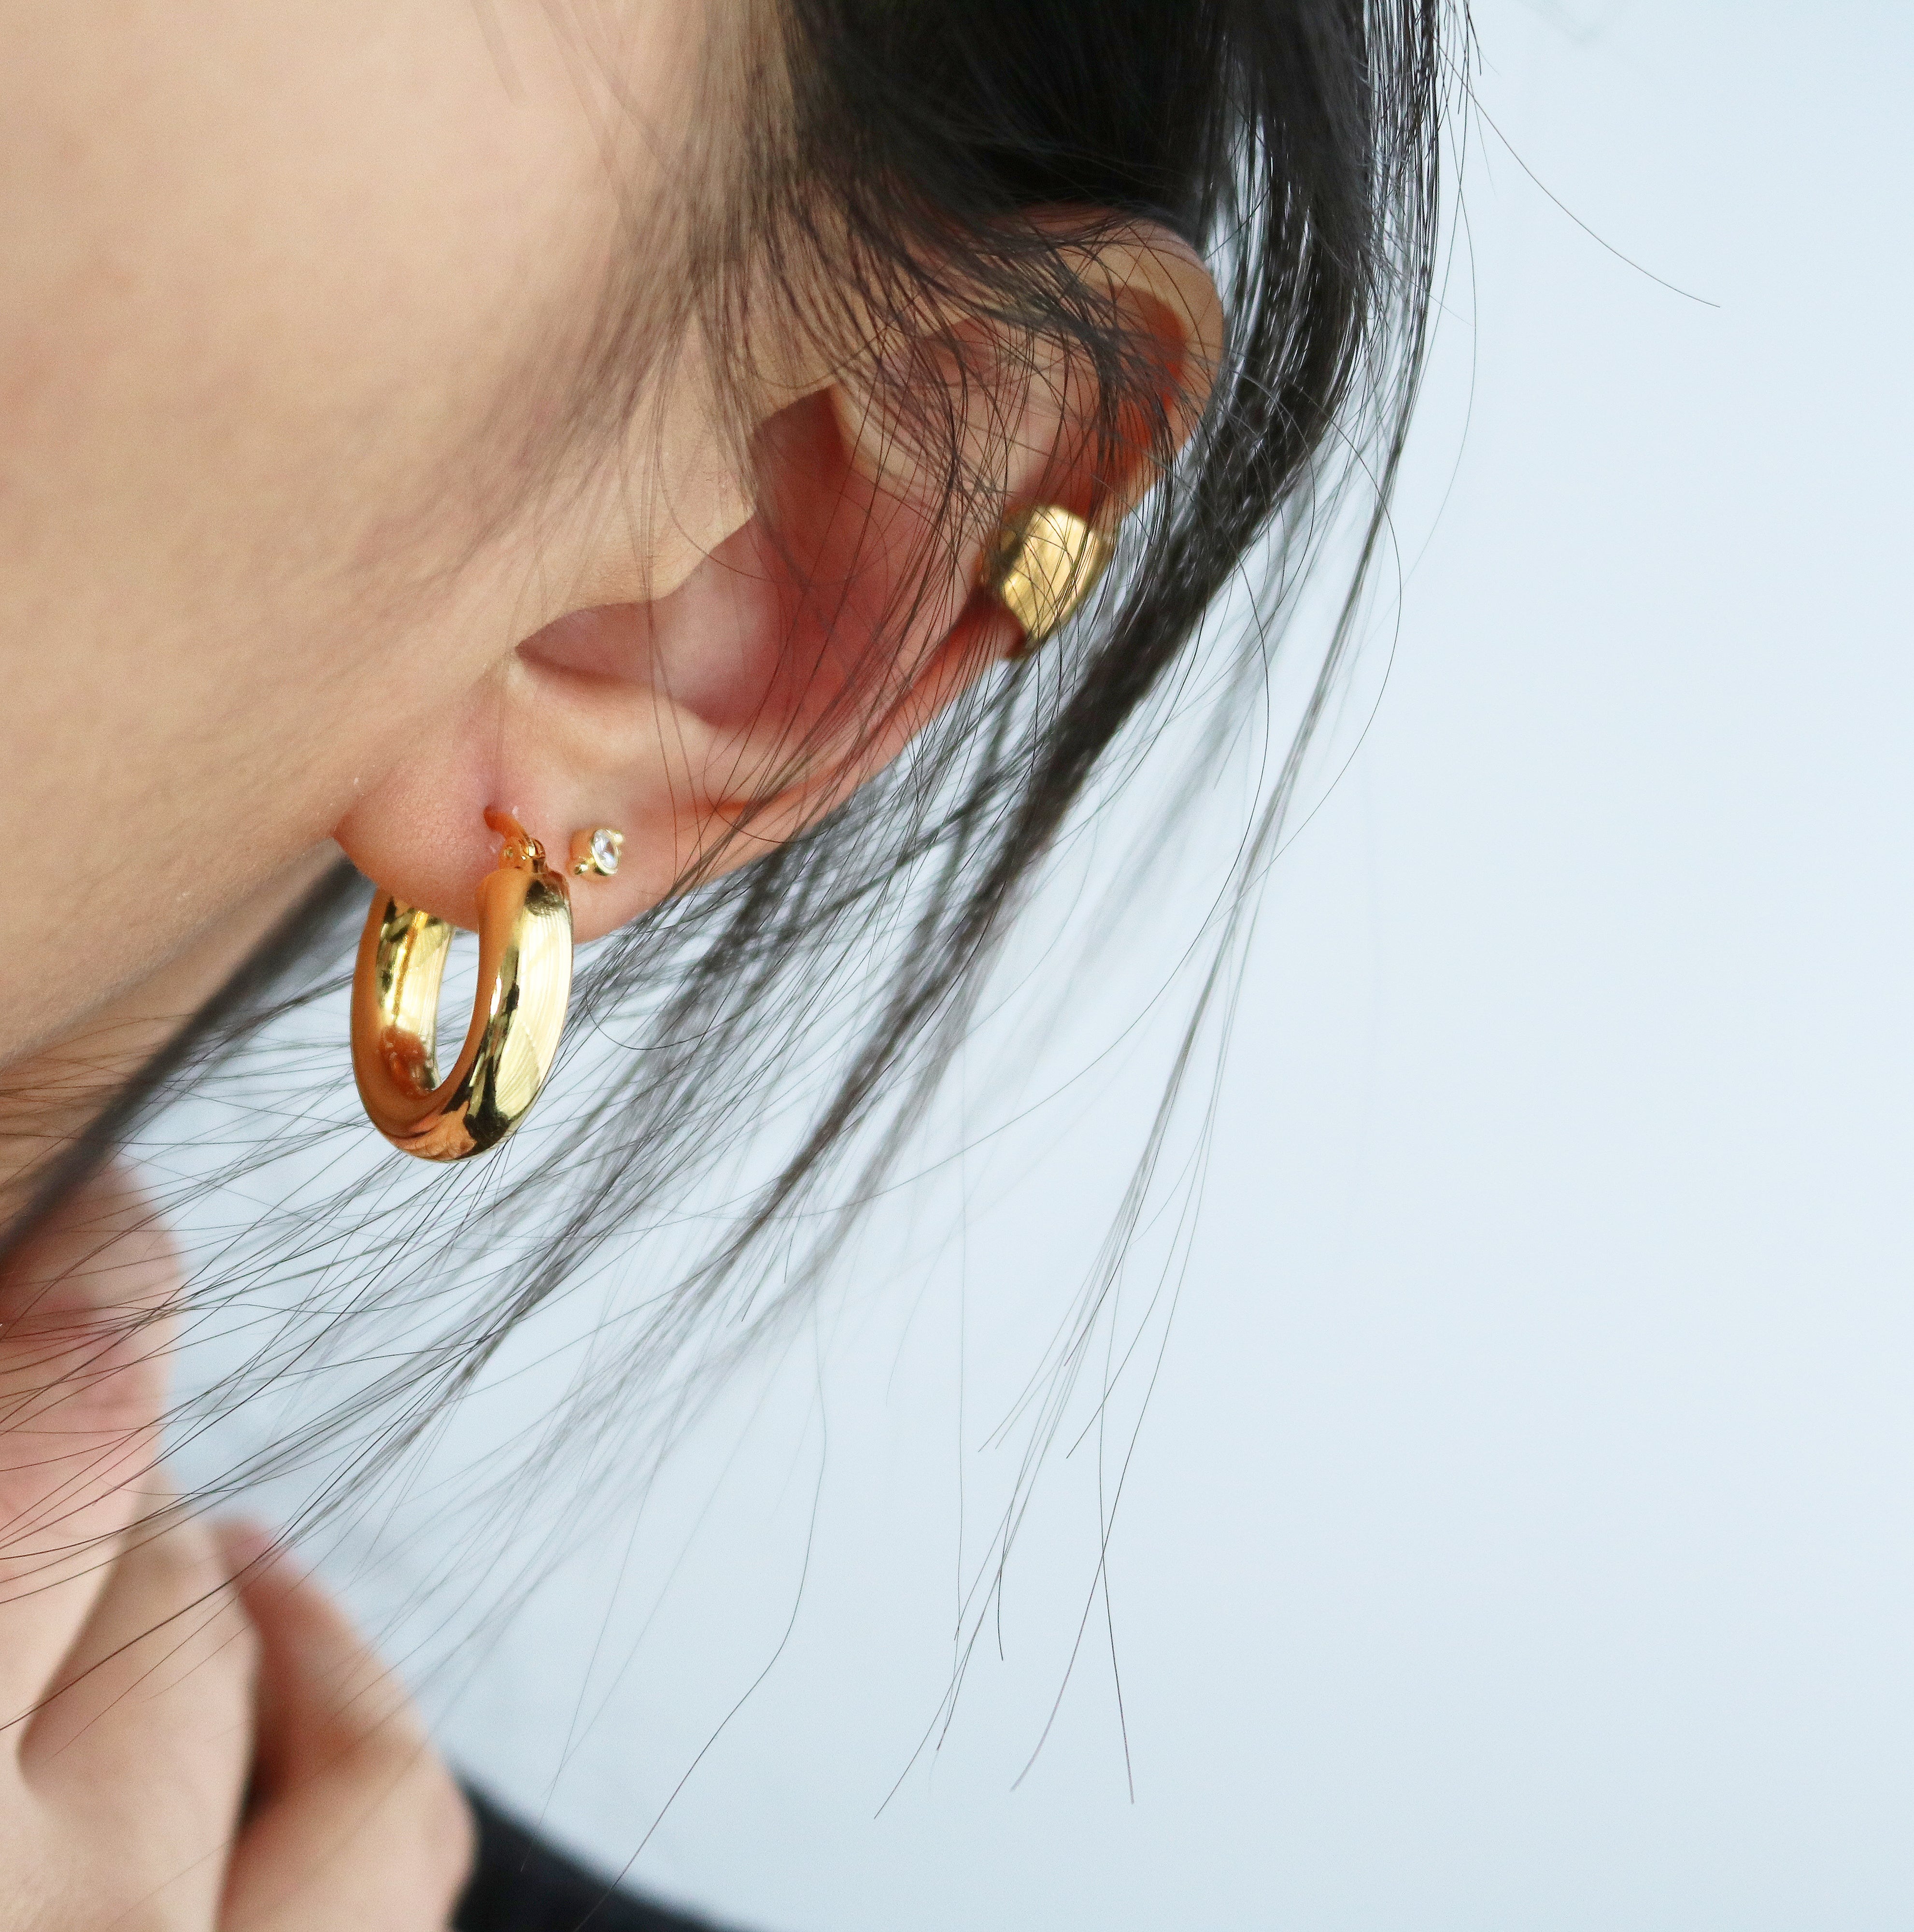 Meideya Jewelry - Gold vermeil classic hollow hoop earrings